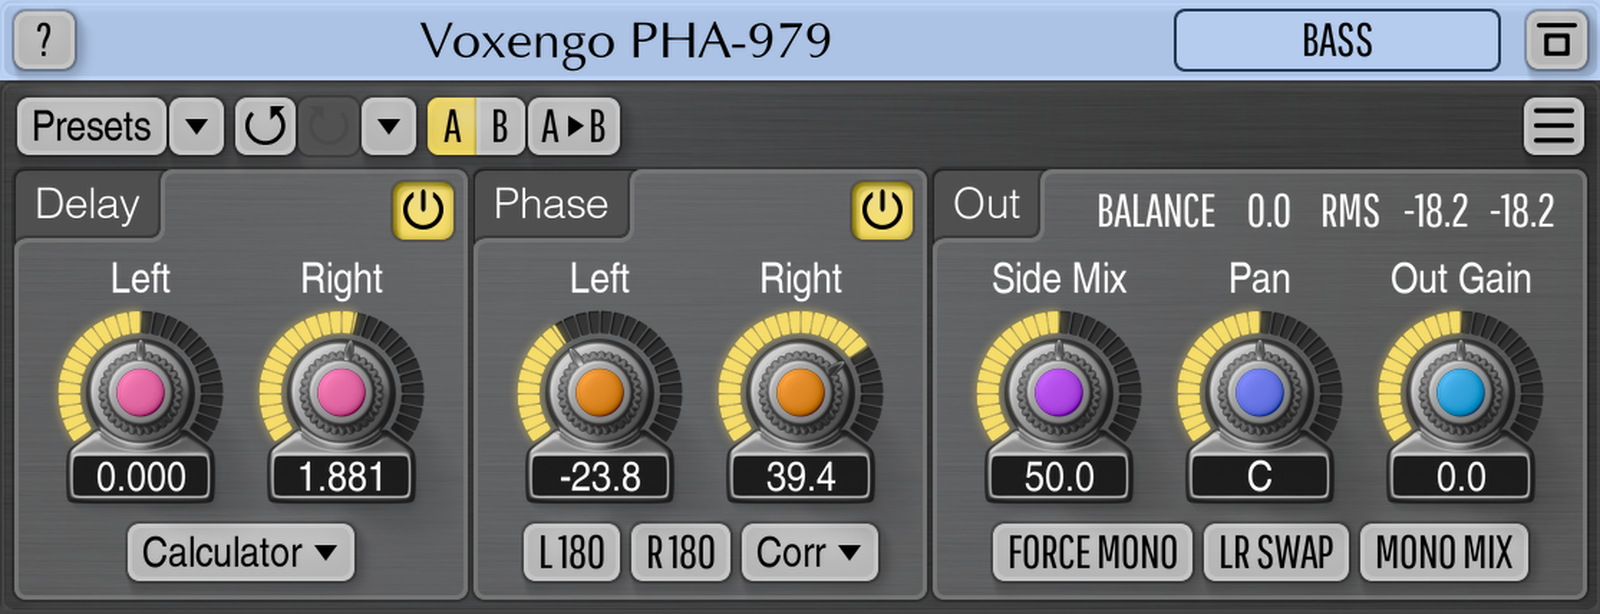 Voxengo PHA-979 screen shot